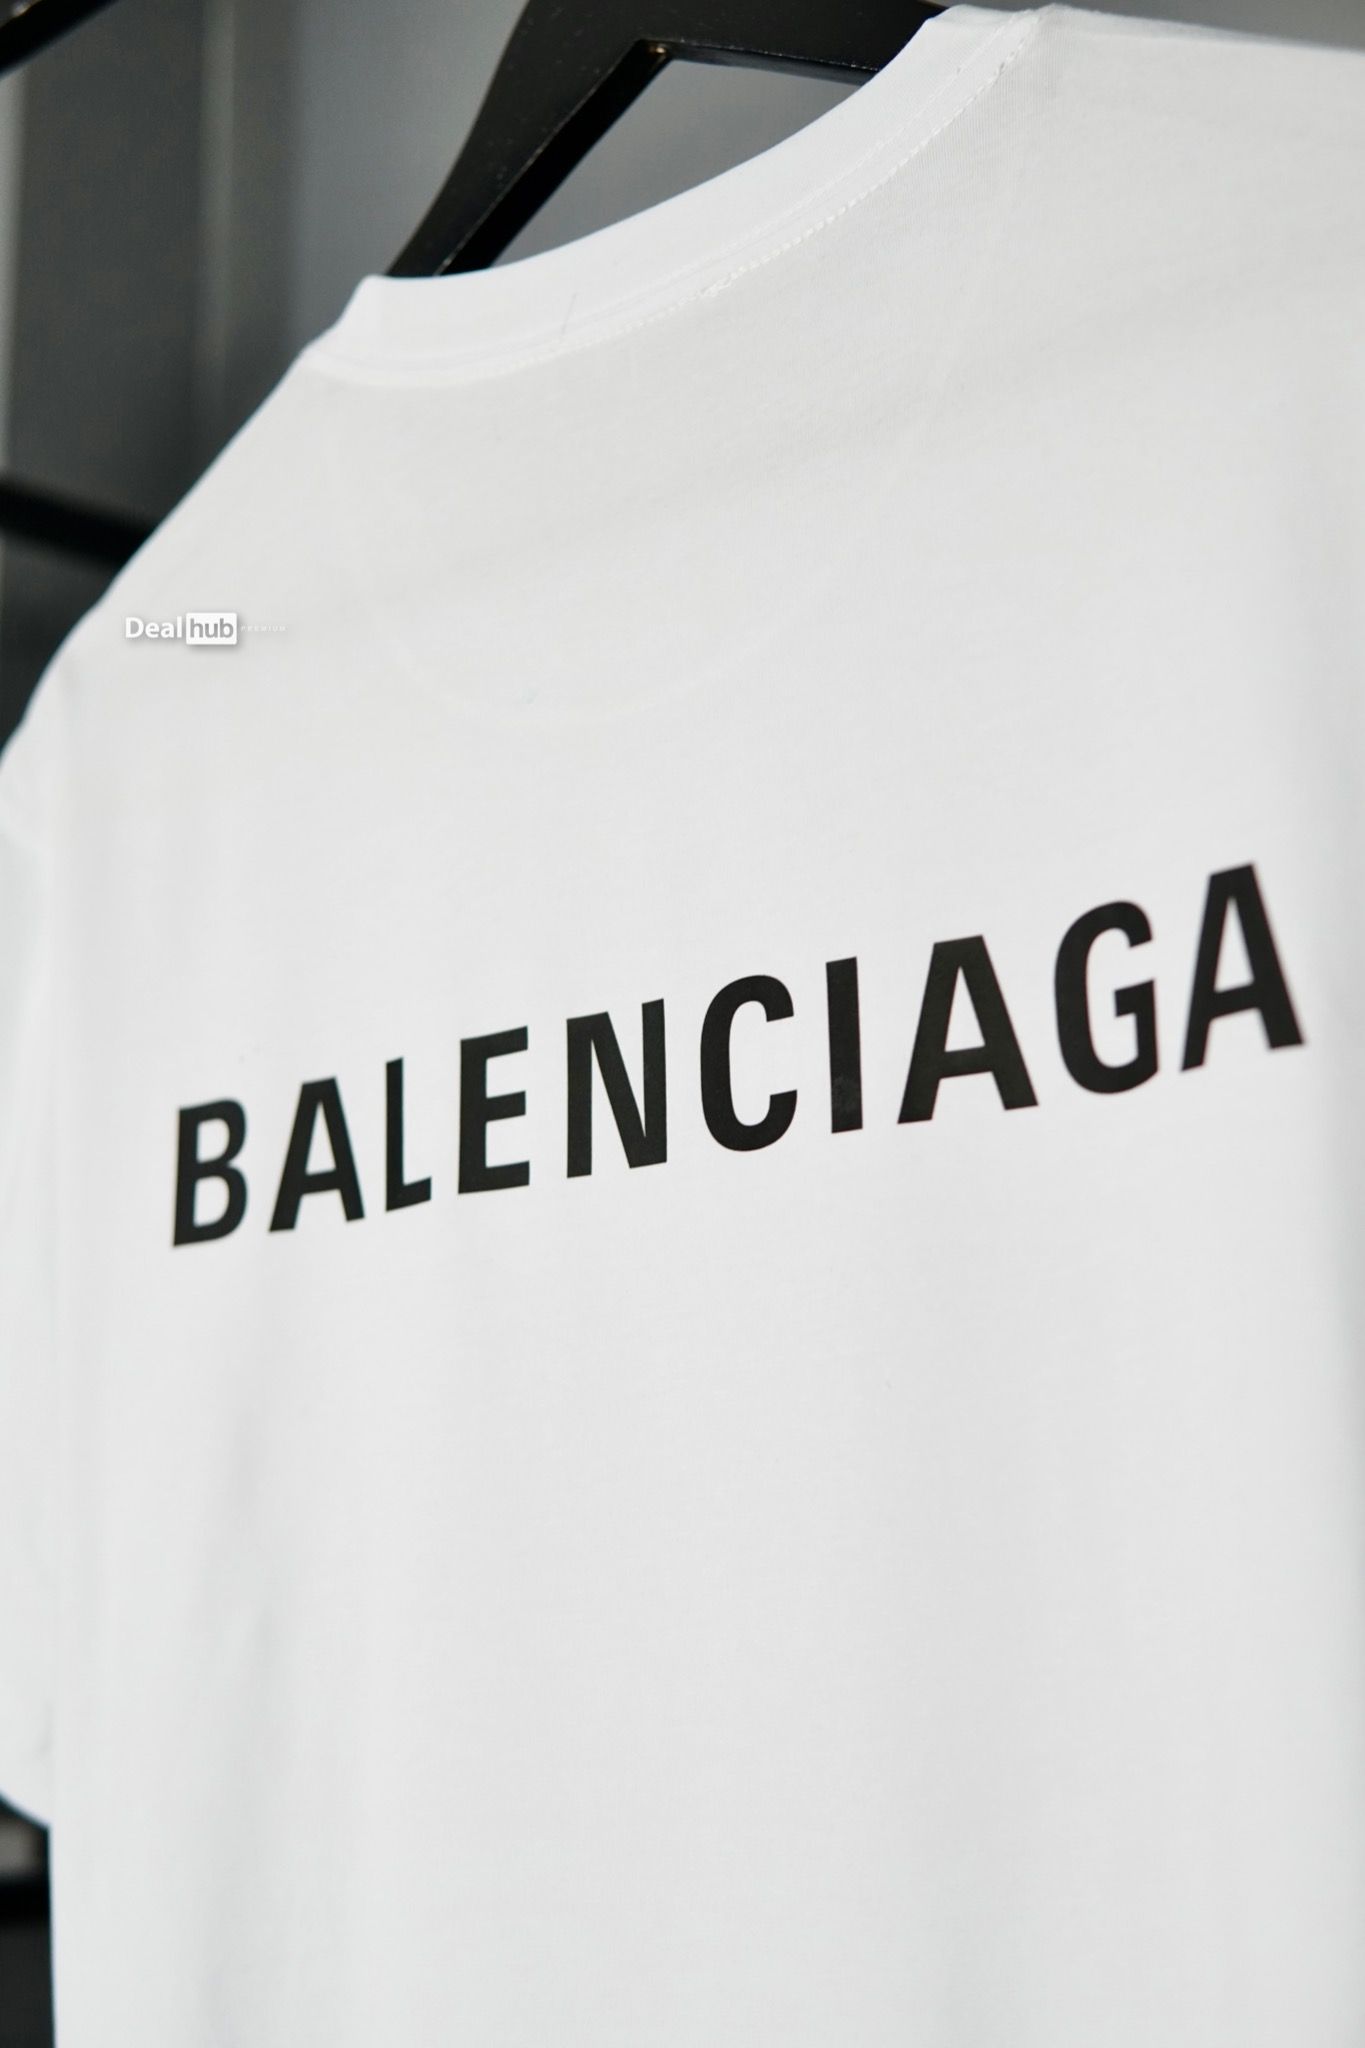 Balenciaga Paris Flag Logo Crewneck Sweatshirt Black 1000  MEN from Onu UK